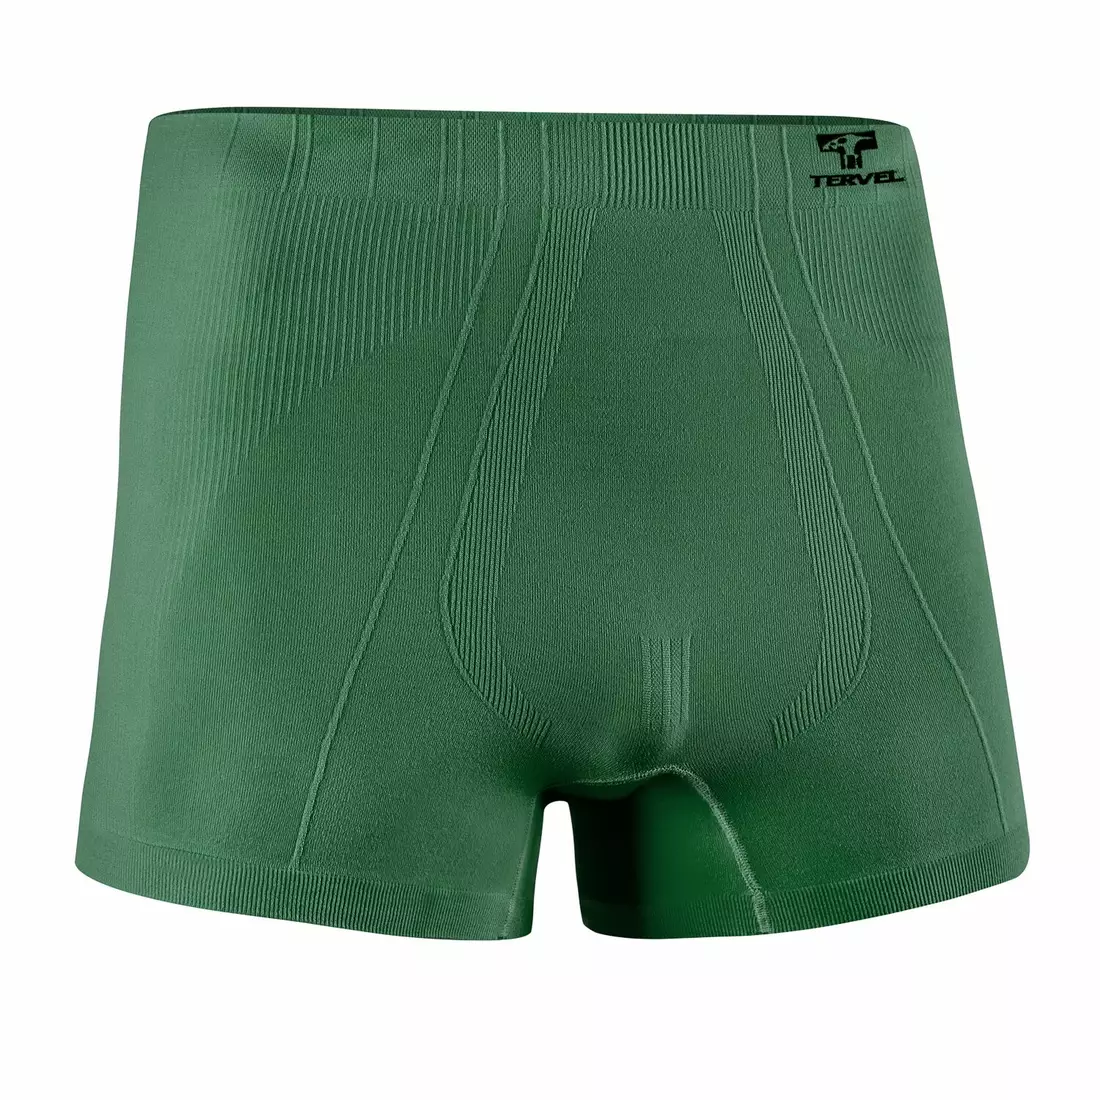 TERVEL - COMFORTLINE 3302 - men's boxer shorts, color: Military (green)